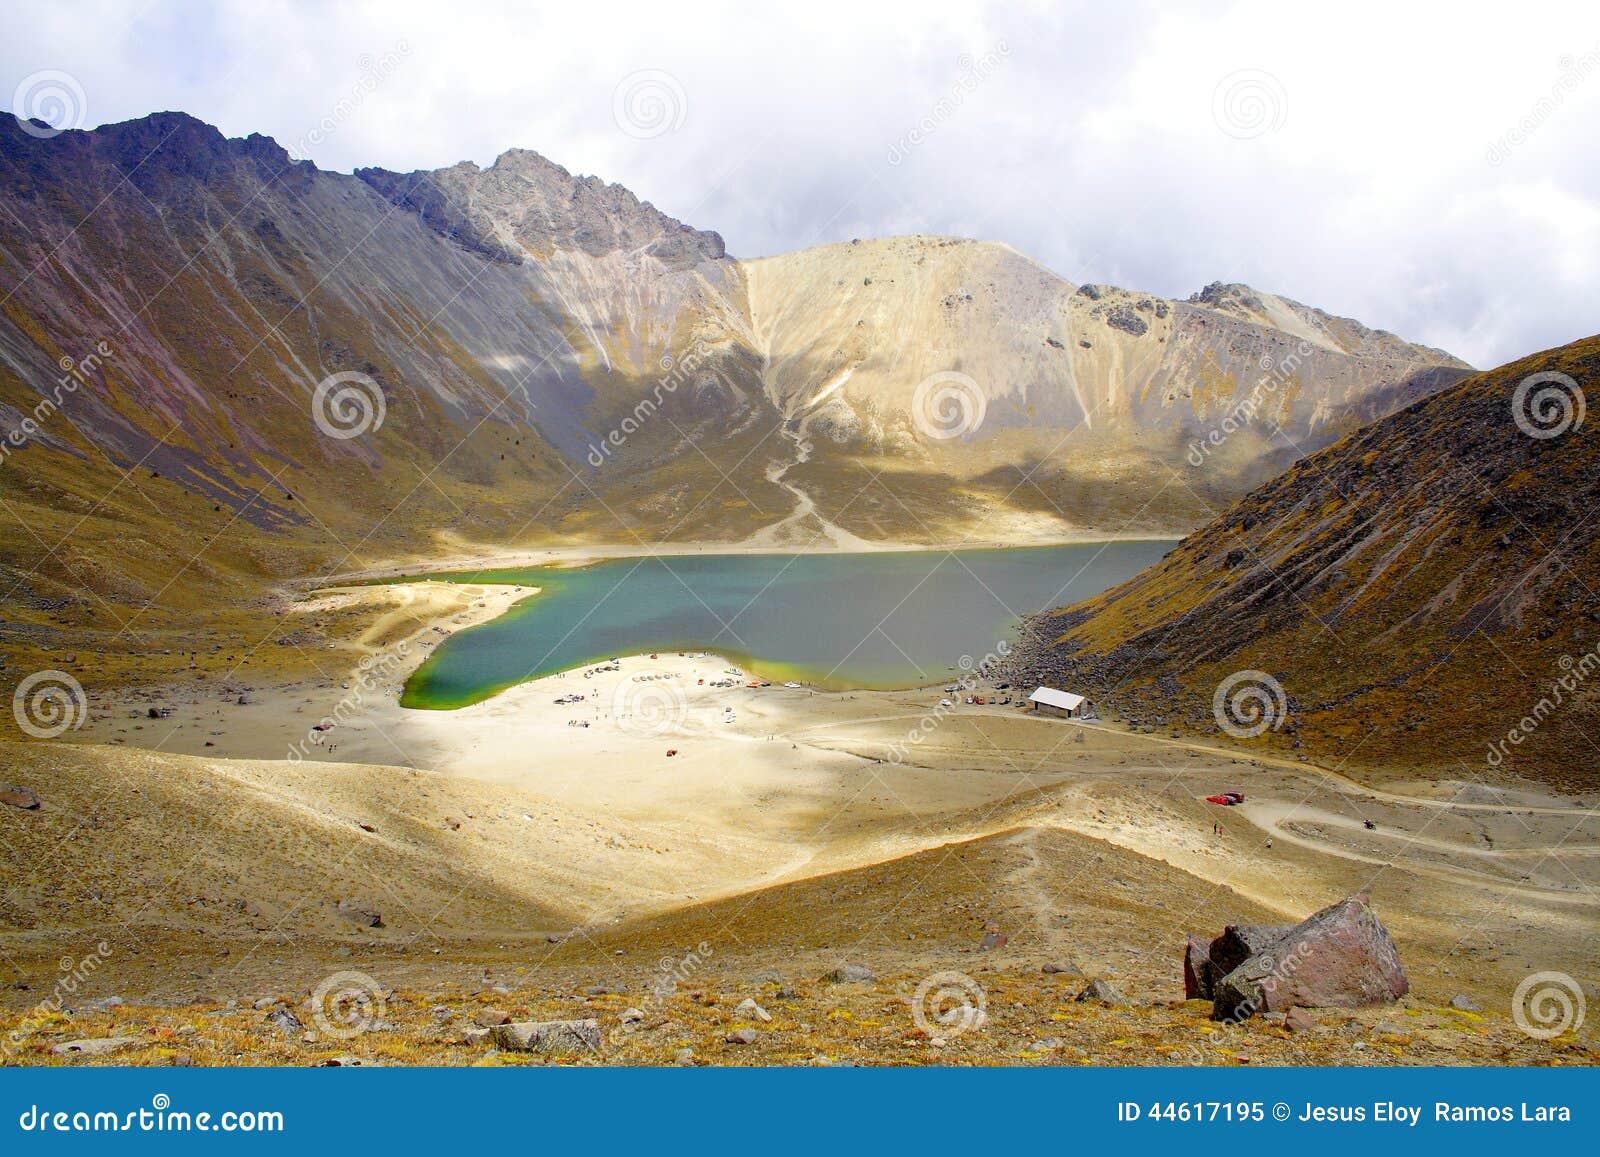 lake in the cone of the nevado de toluca volcano, mexico i